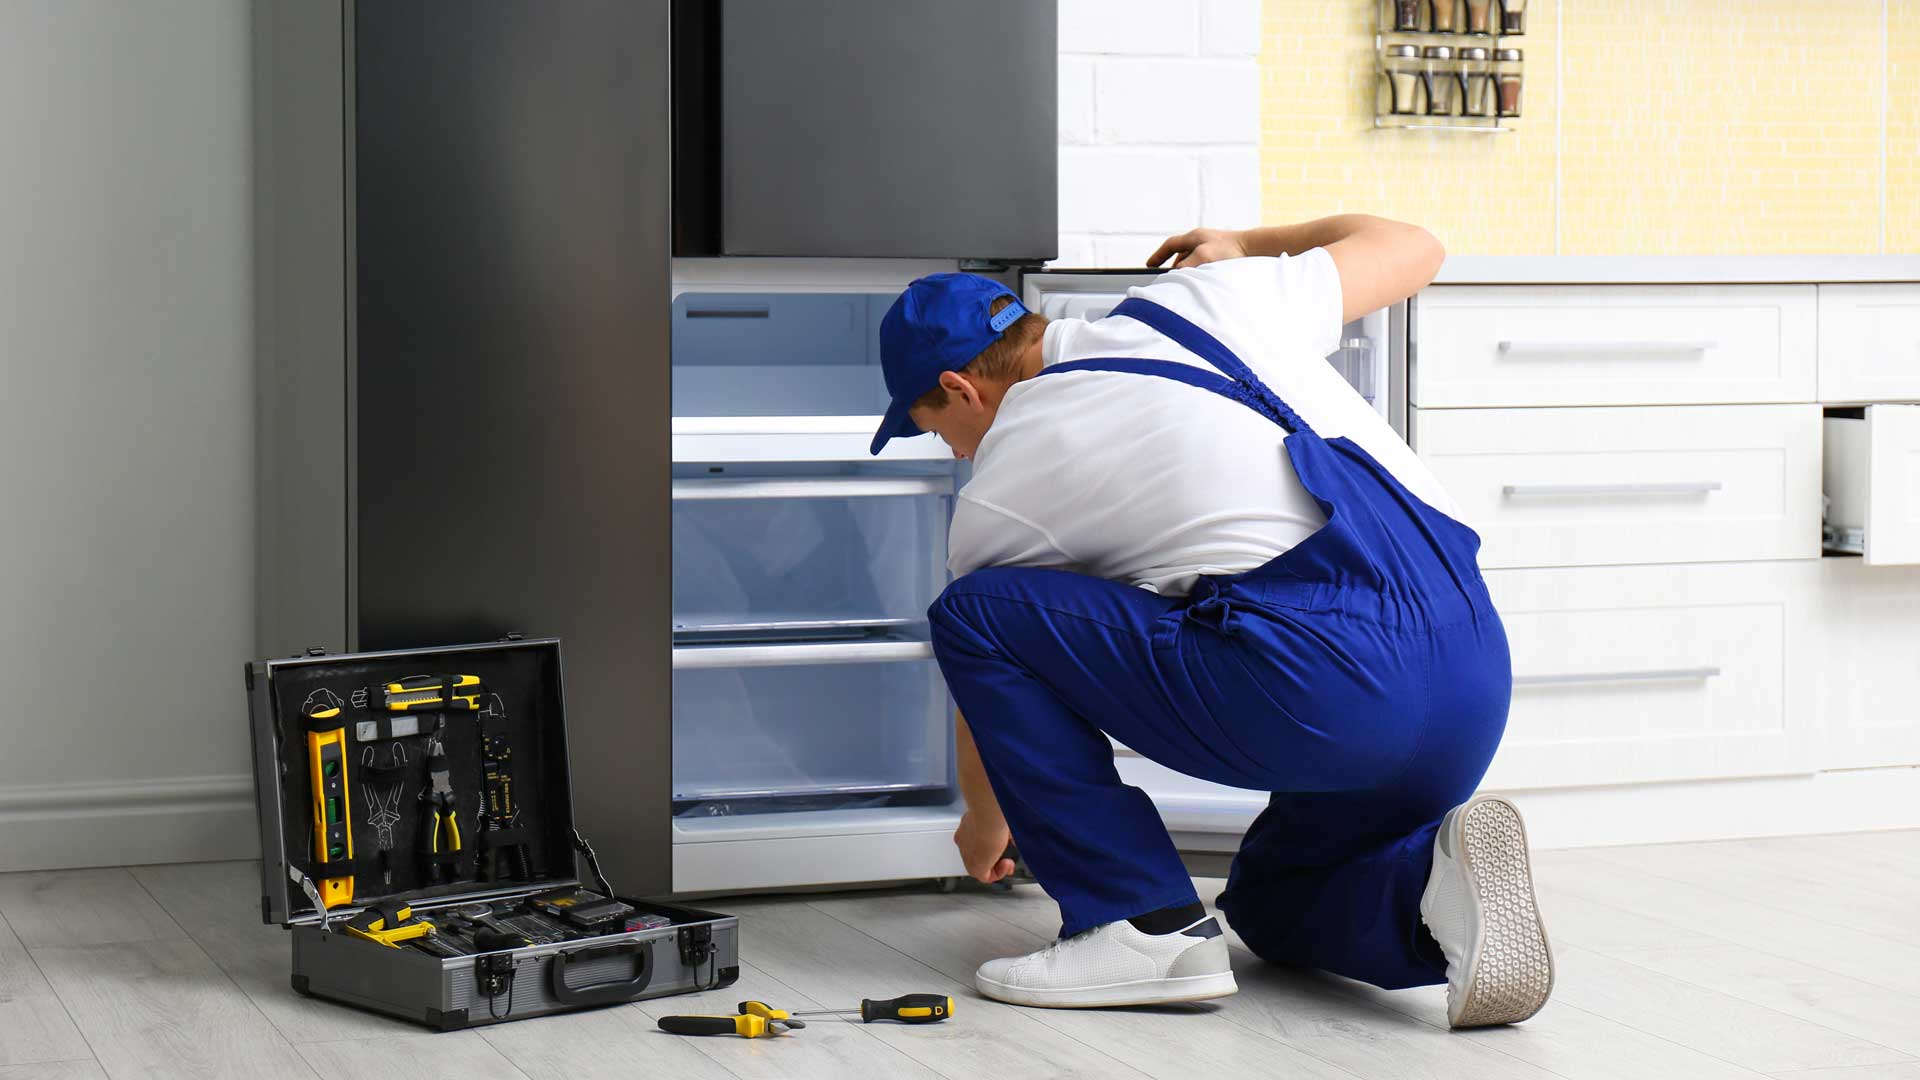 Repair technician working on a refrigerator